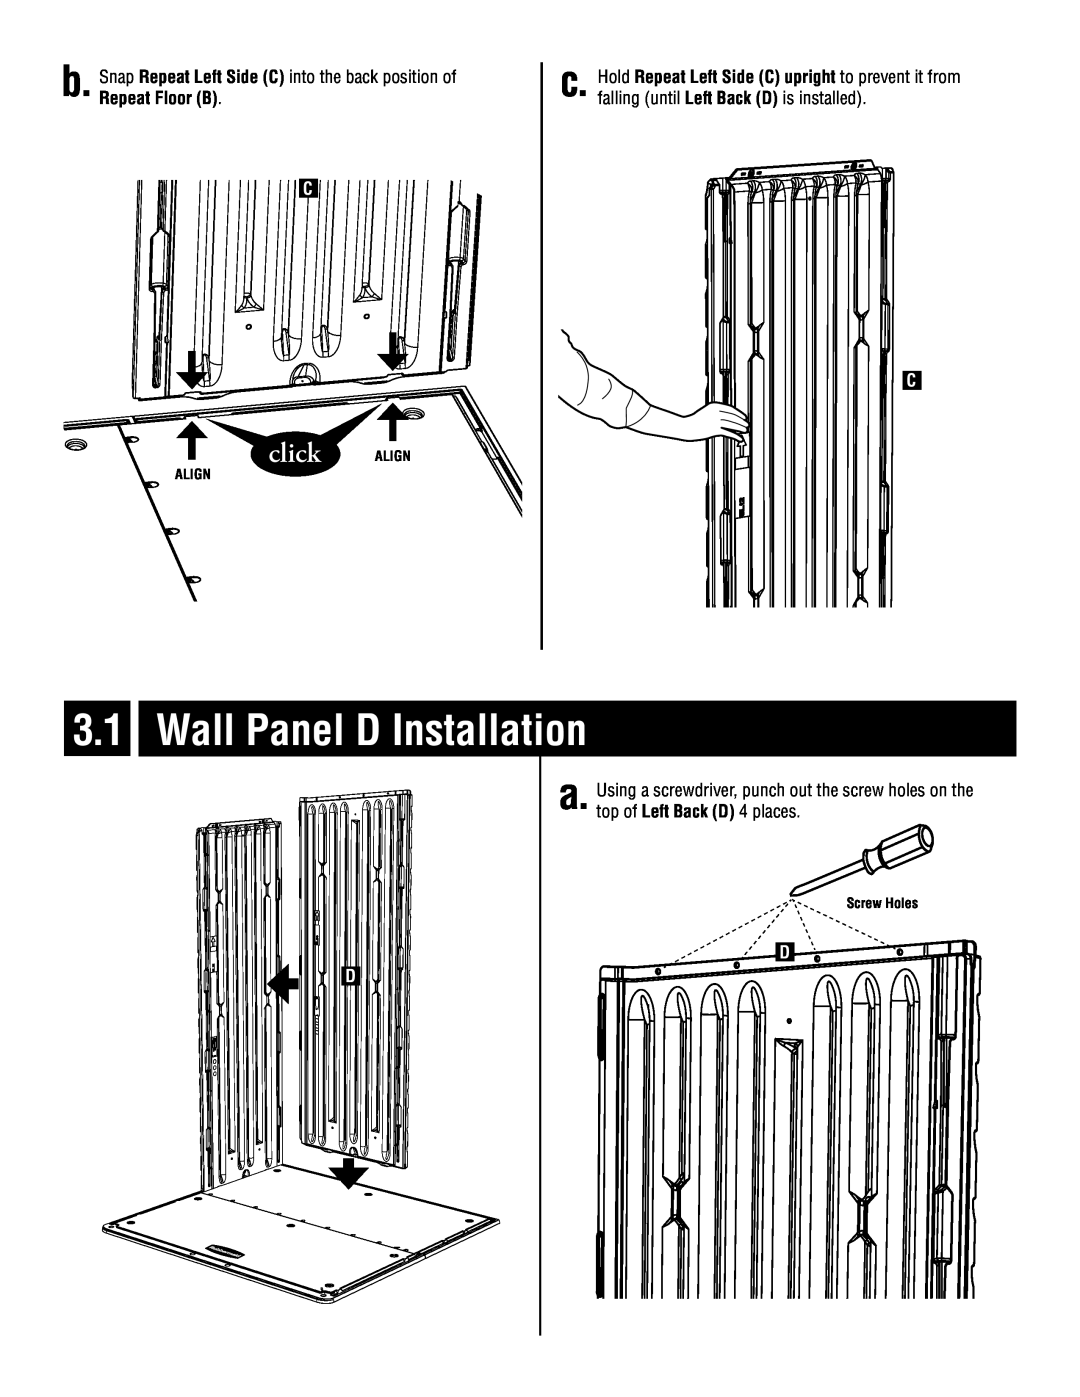 Rubbermaid 5L20 instruction manual Wall Panel D Installation a, click ALIGN, Align, Screw Holes 